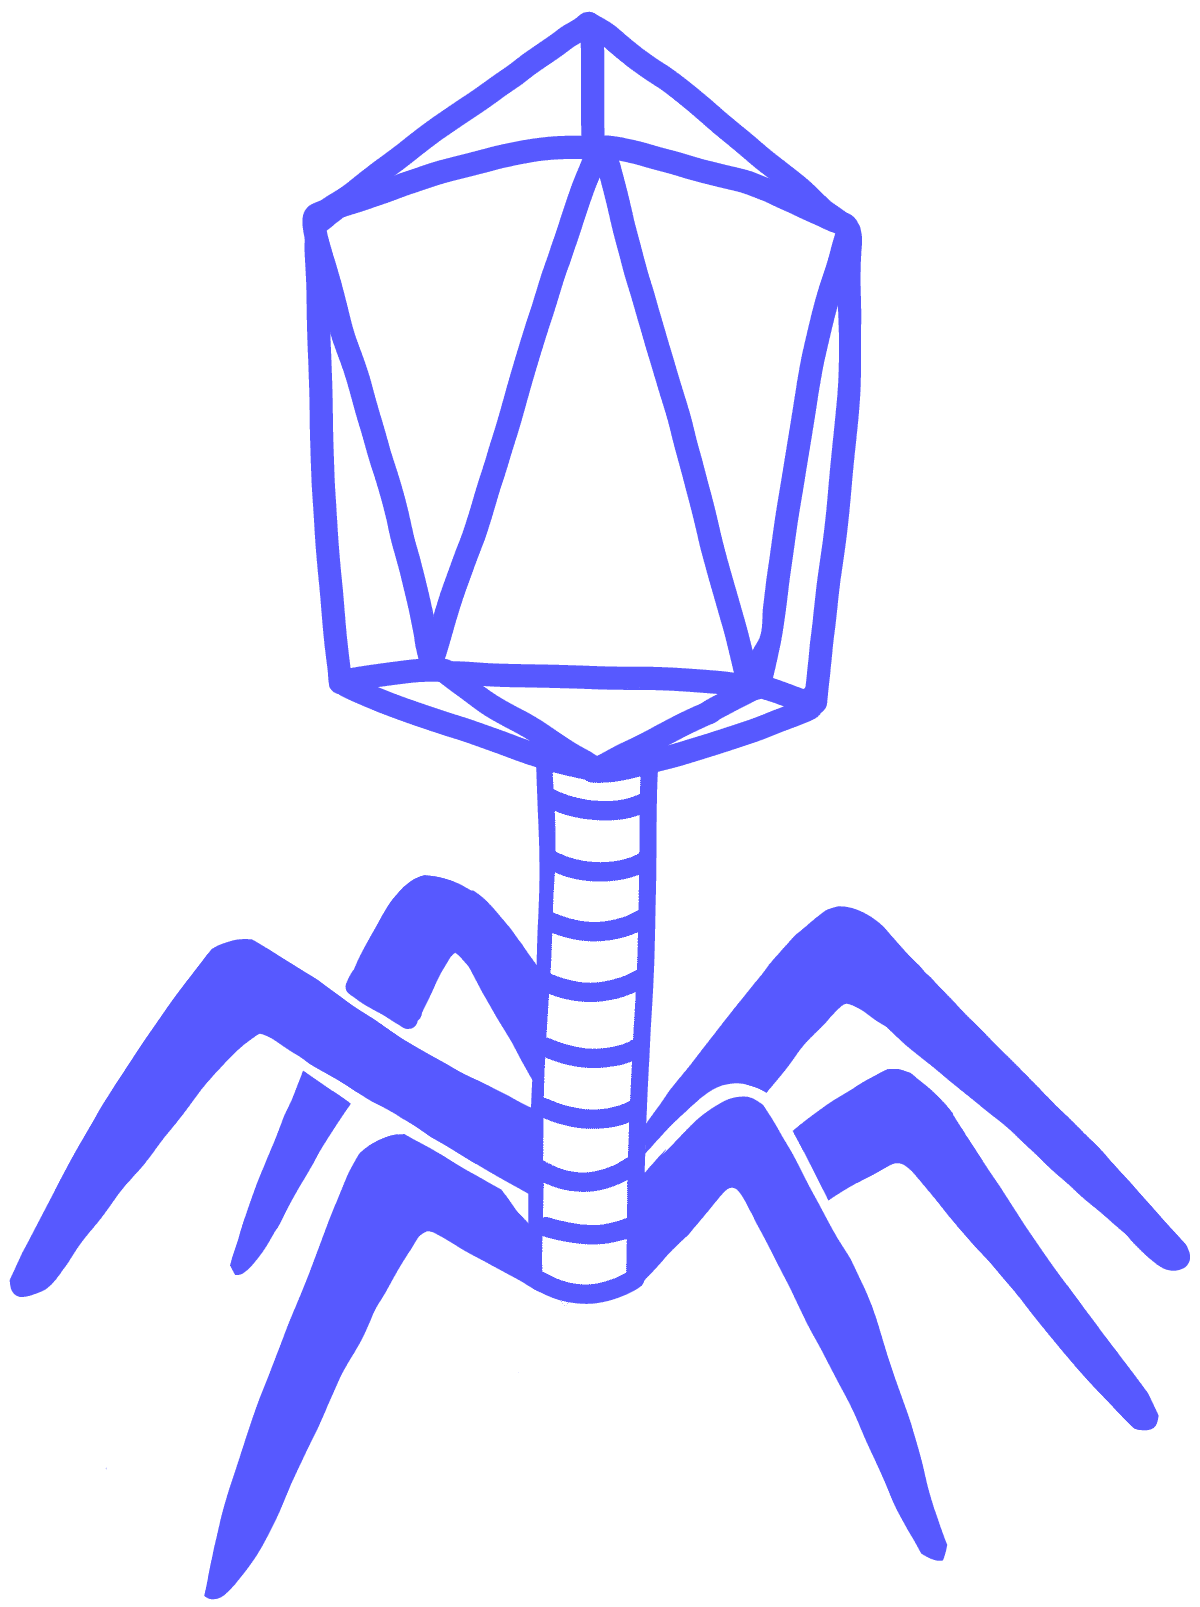 Image of a blue phage